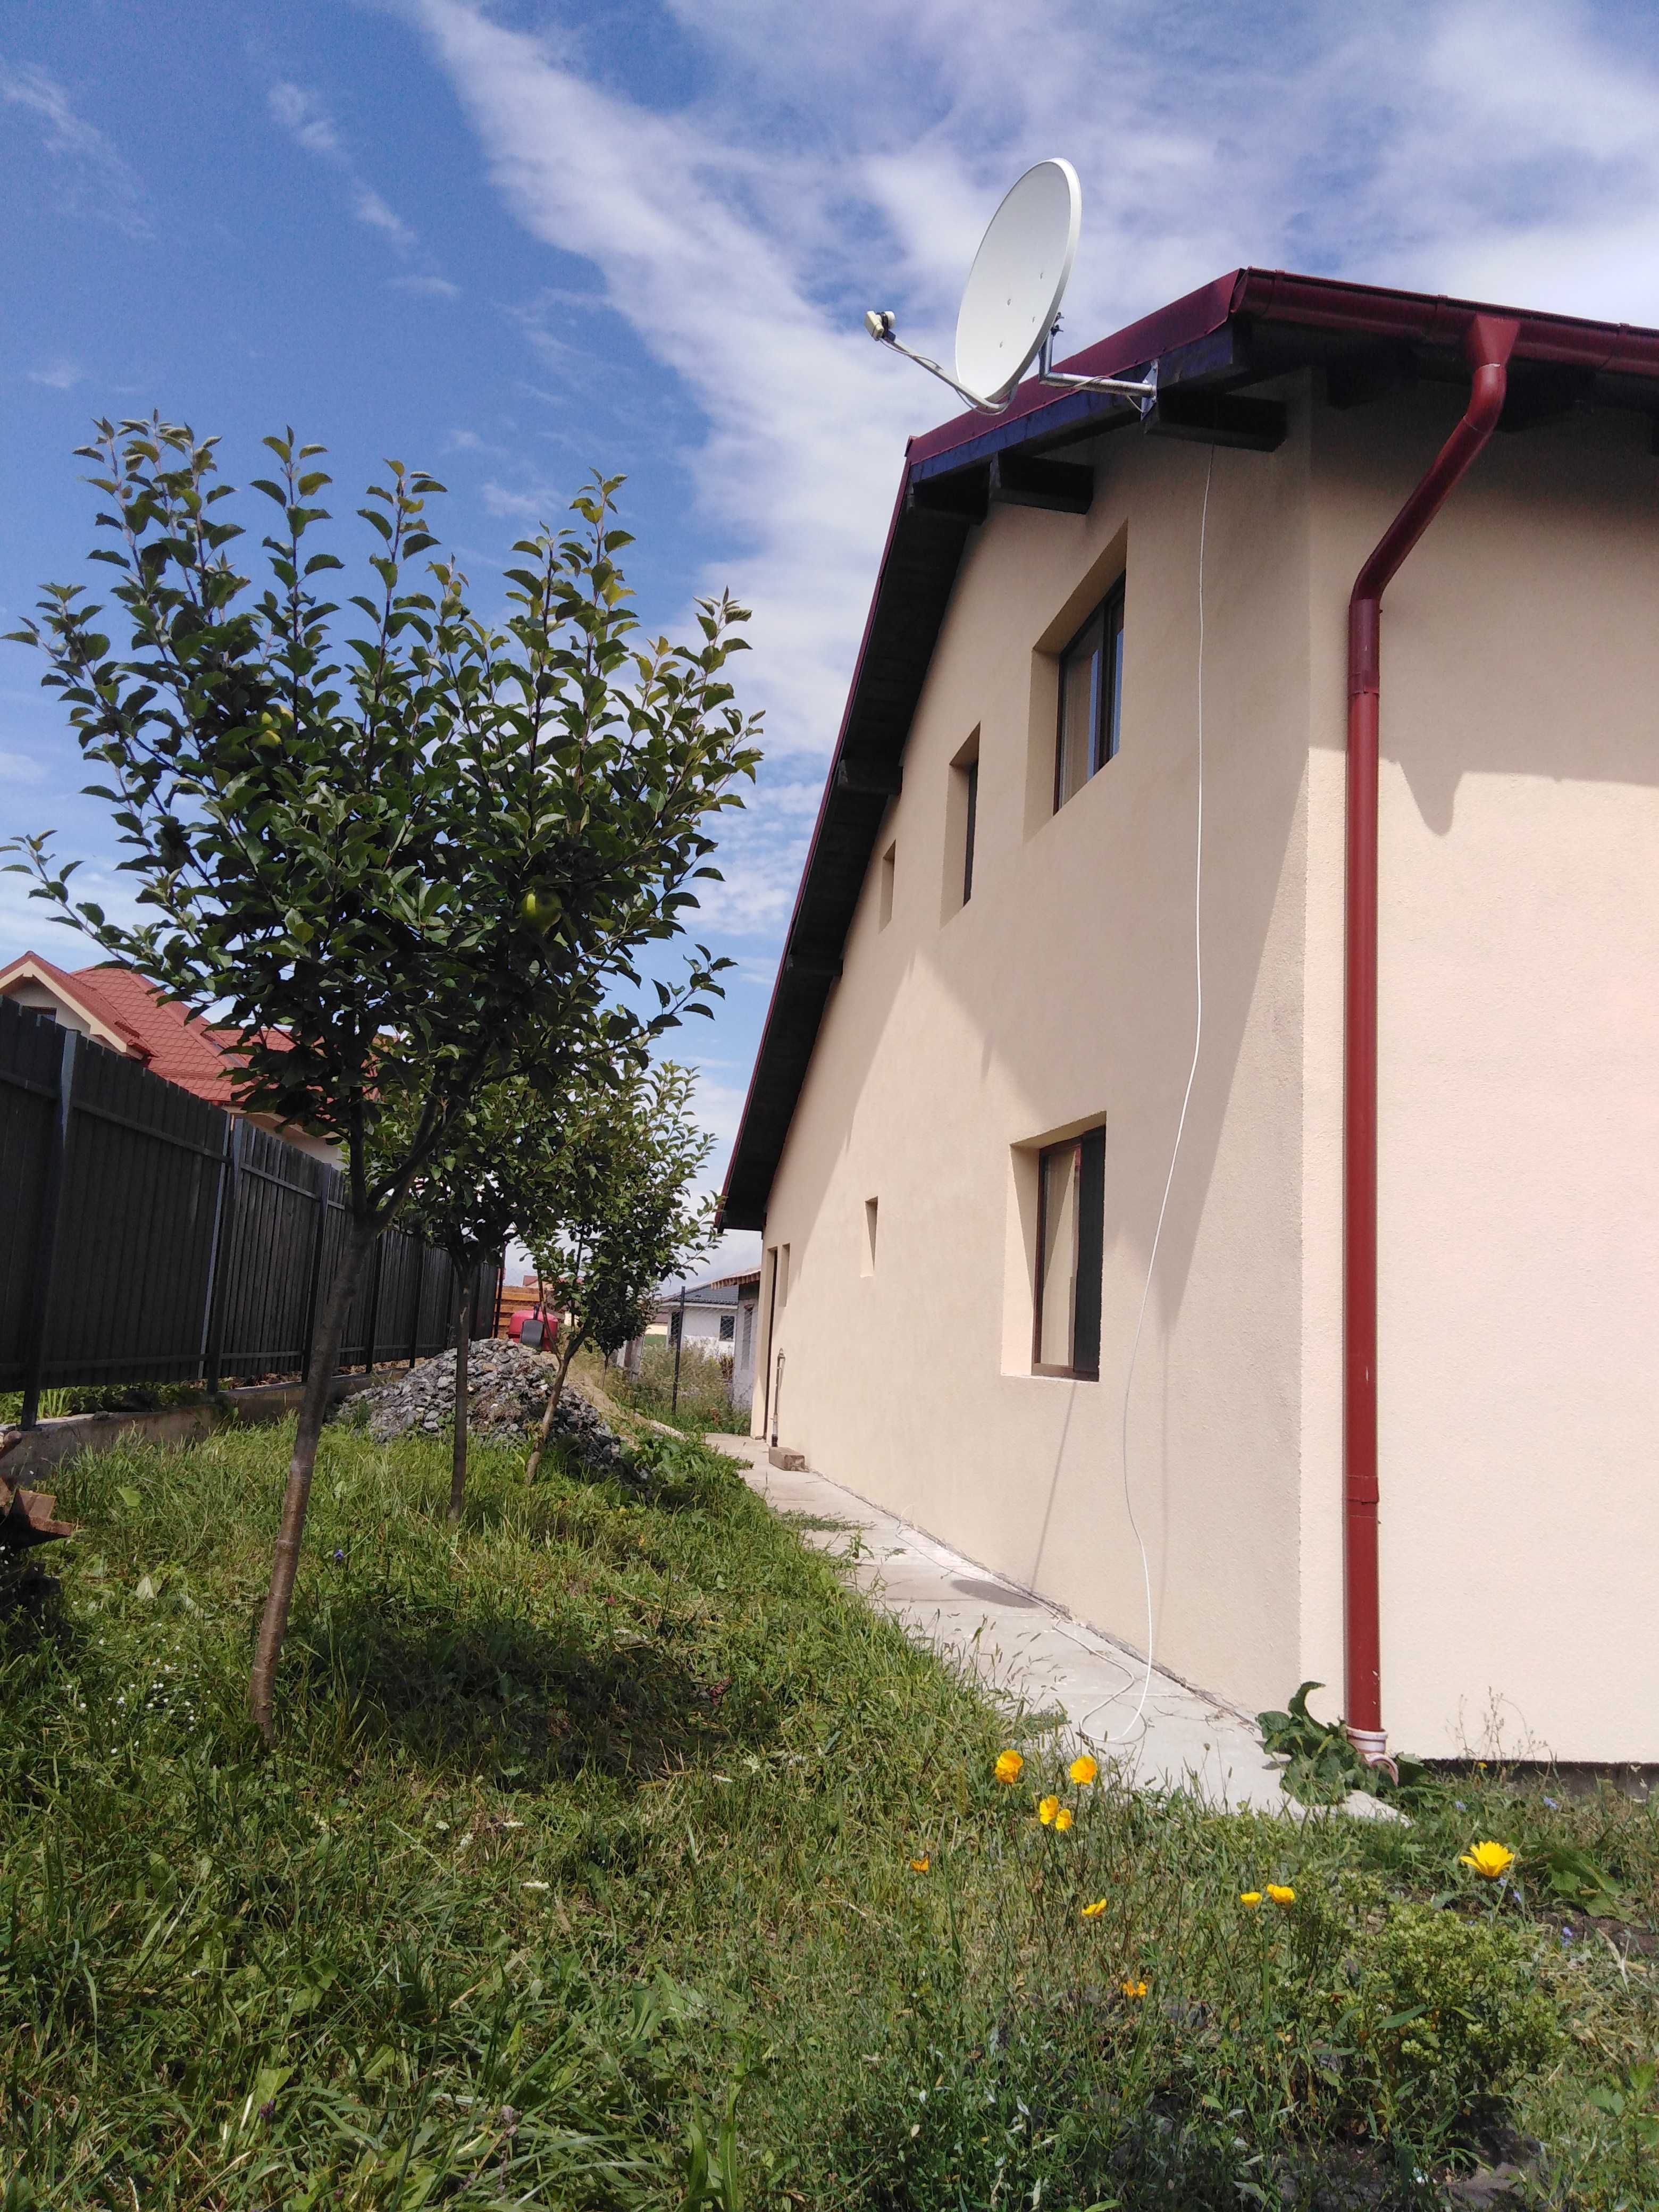 Casa  5 cam,210 mp,Chinteni/Cluj,2 bai,2 terase, garaj,CT,beci,gradina